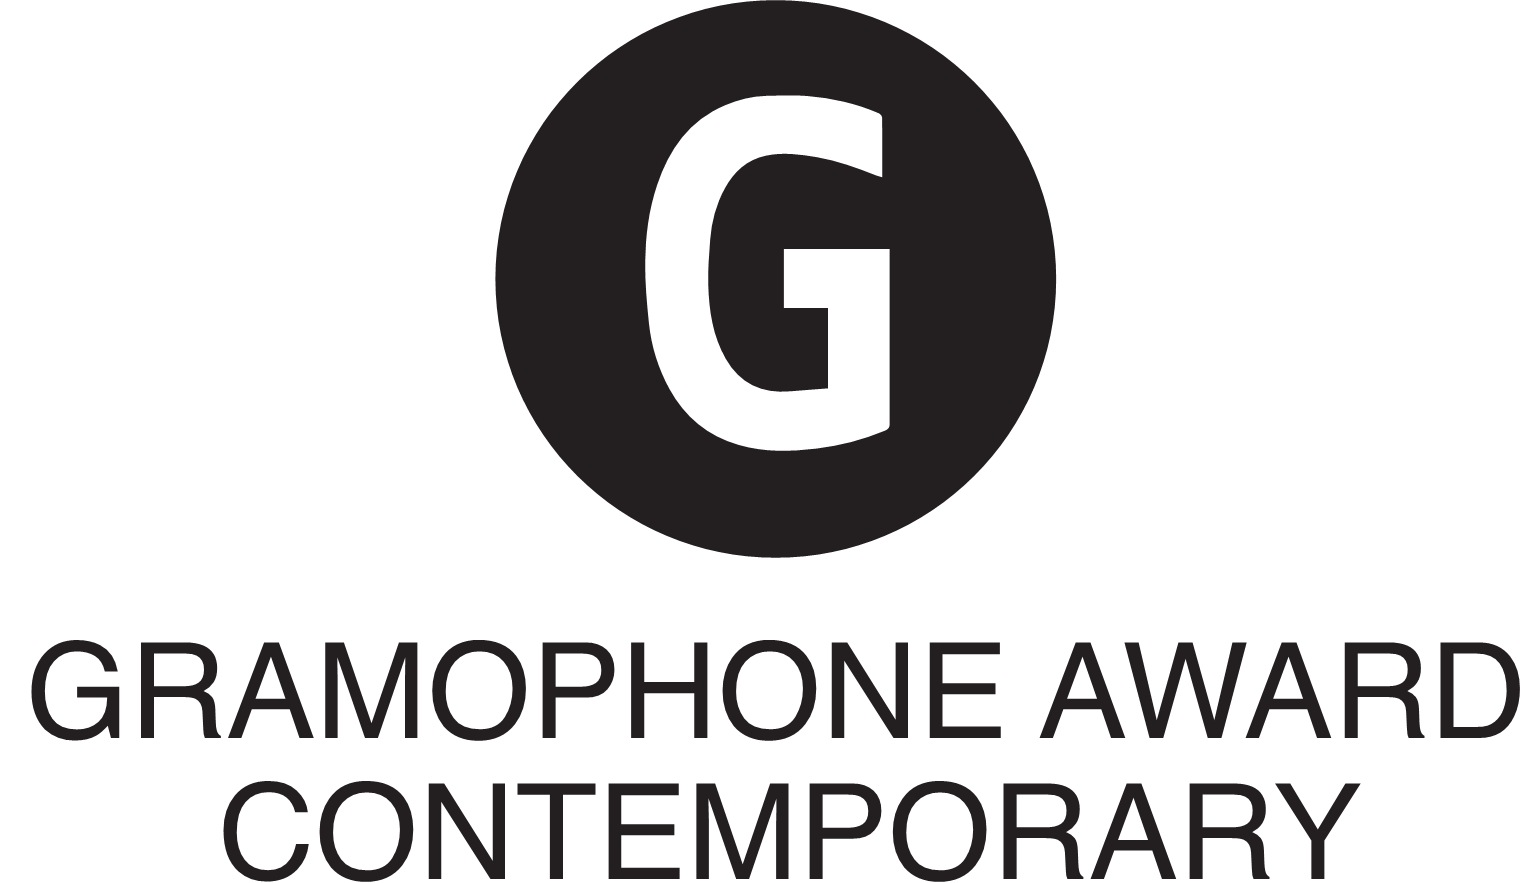 Gramophone Award: 'Contemporary' (2012)